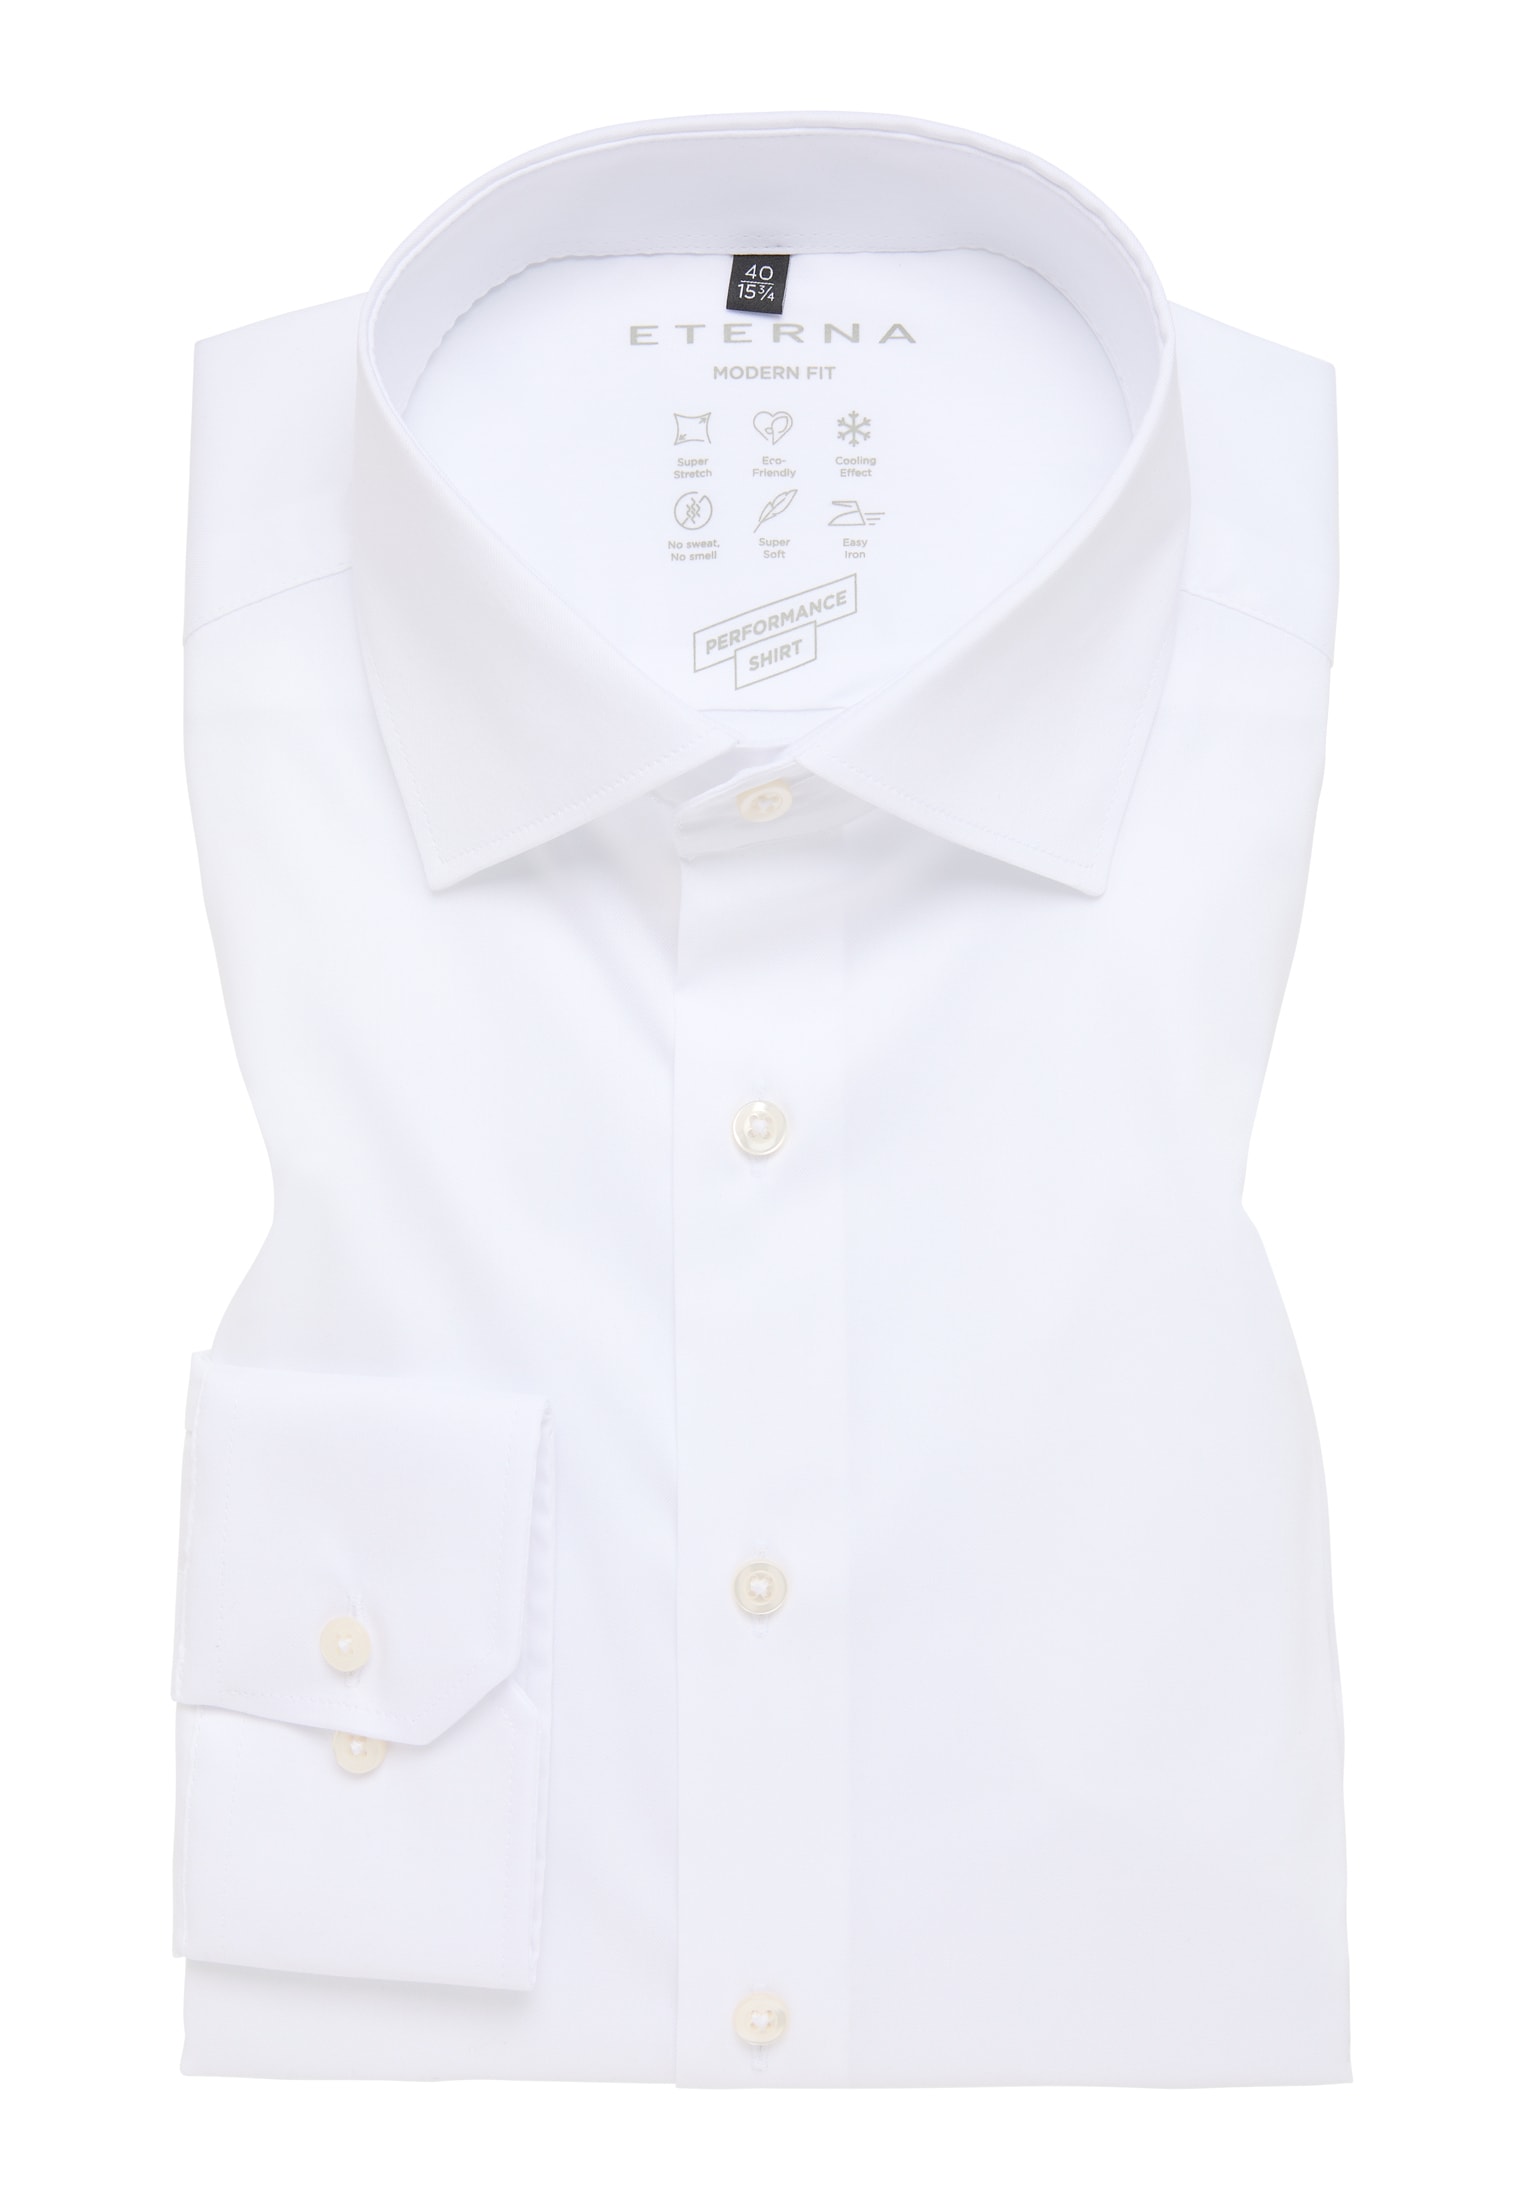 MODERN | in Shirt FIT 40 Langarm | weiß 1SH02224-00-01-40-1/1 | unifarben weiß Performance |